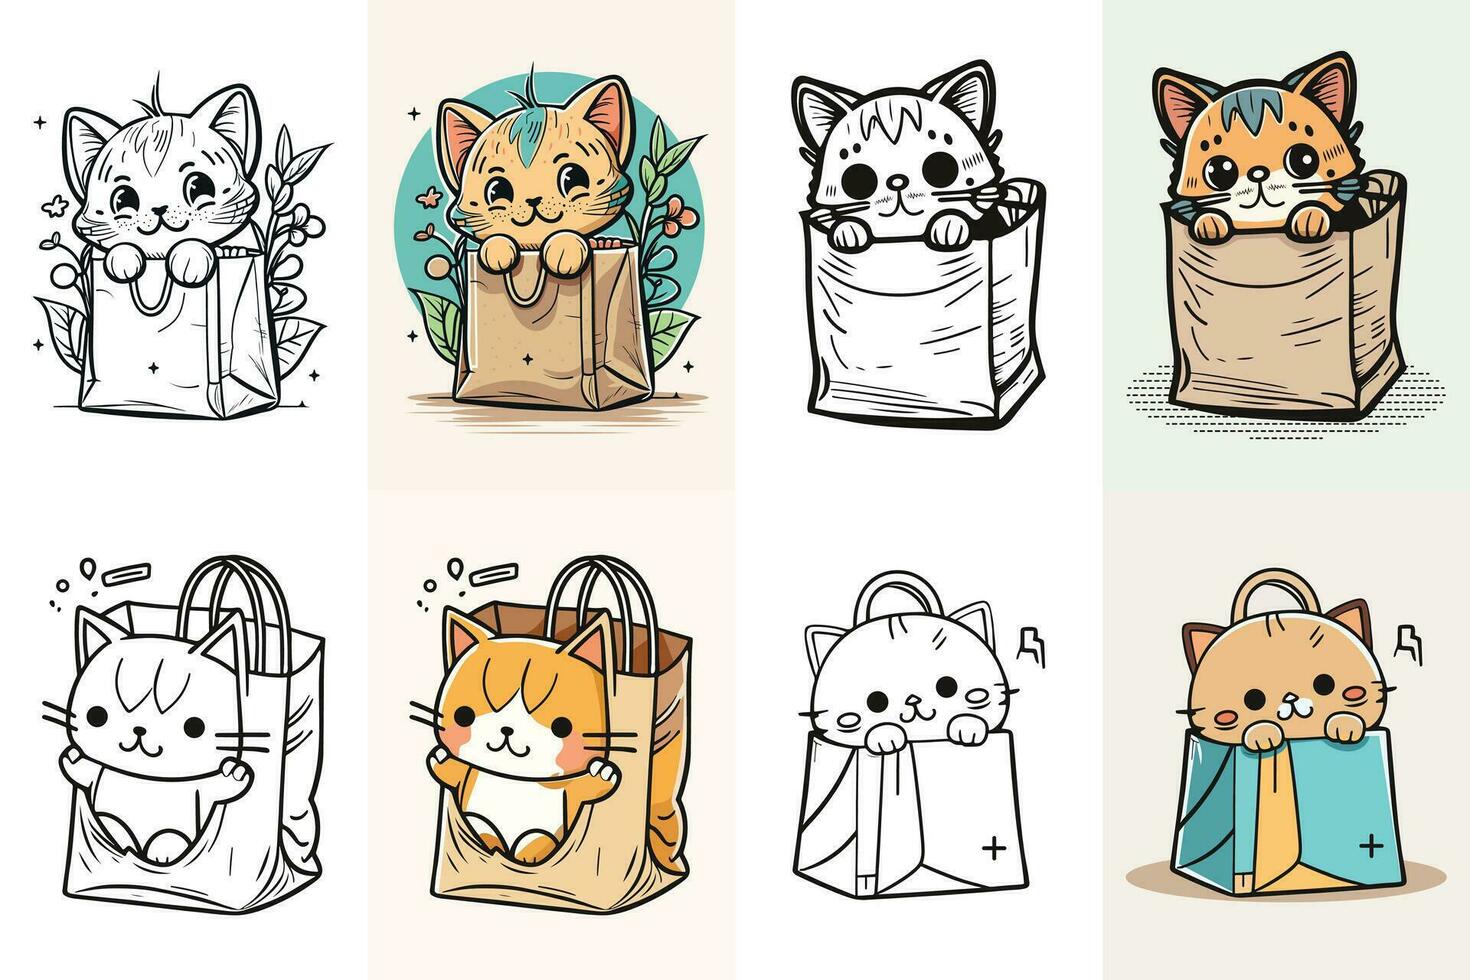 Little Cat in a paper shopping bag bundle, Cat Cartoon in a paper shopping bag bundle, Funny Cat in a paper shopping bag, Cat Lover's, Cute Cat logo design. cat logo, Cat cartoon character design. vector